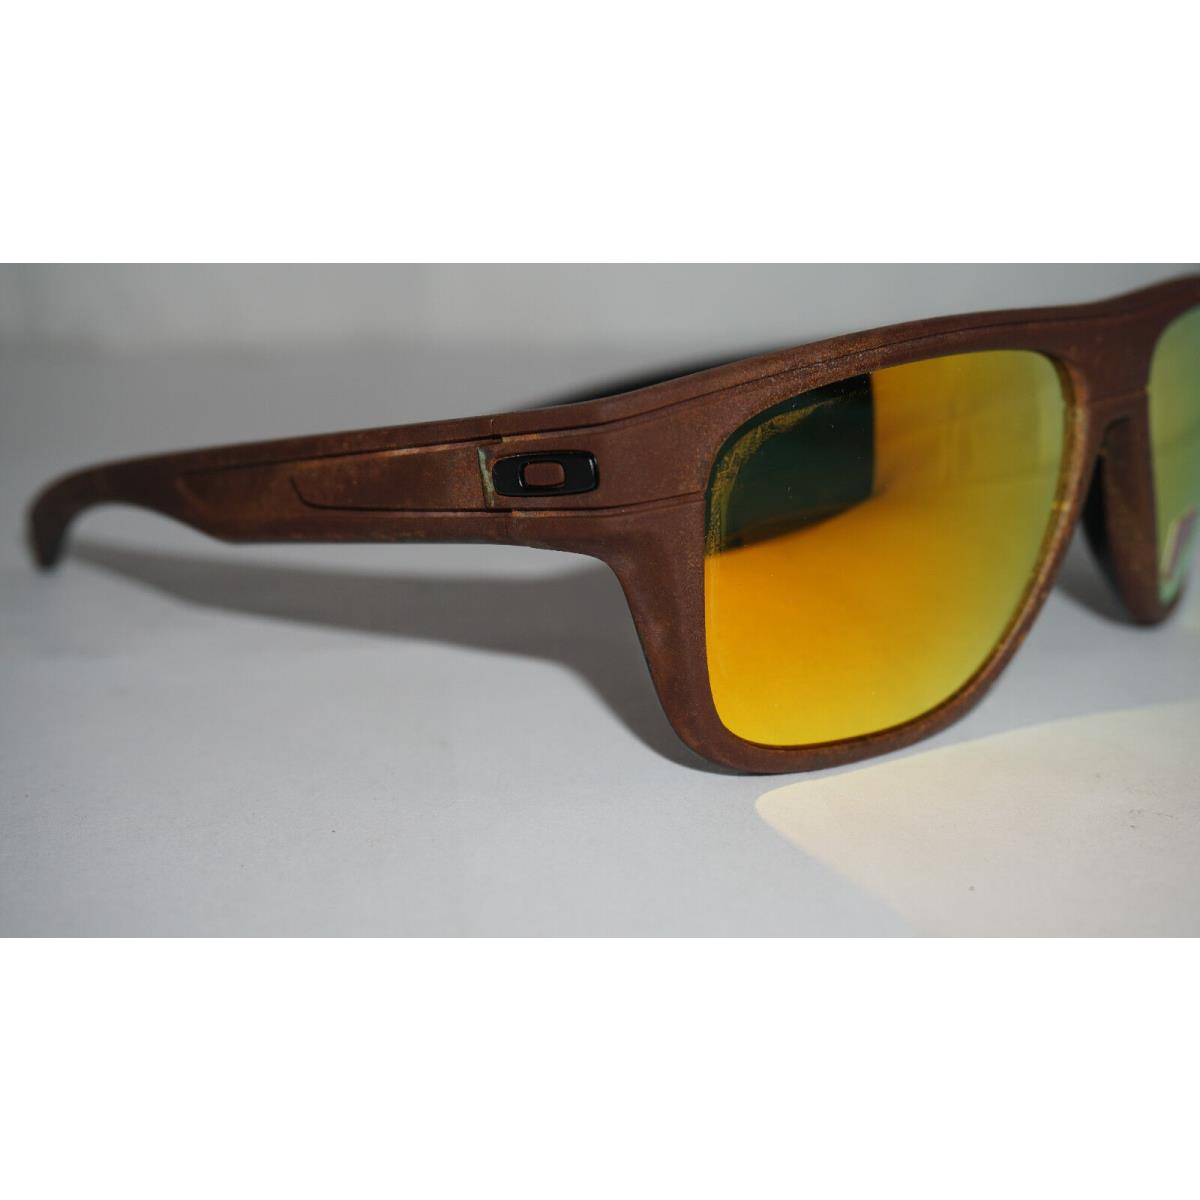 Oakley sunglasses  - Rust Decay Frame, Fire Iridium Polarized Lens 3